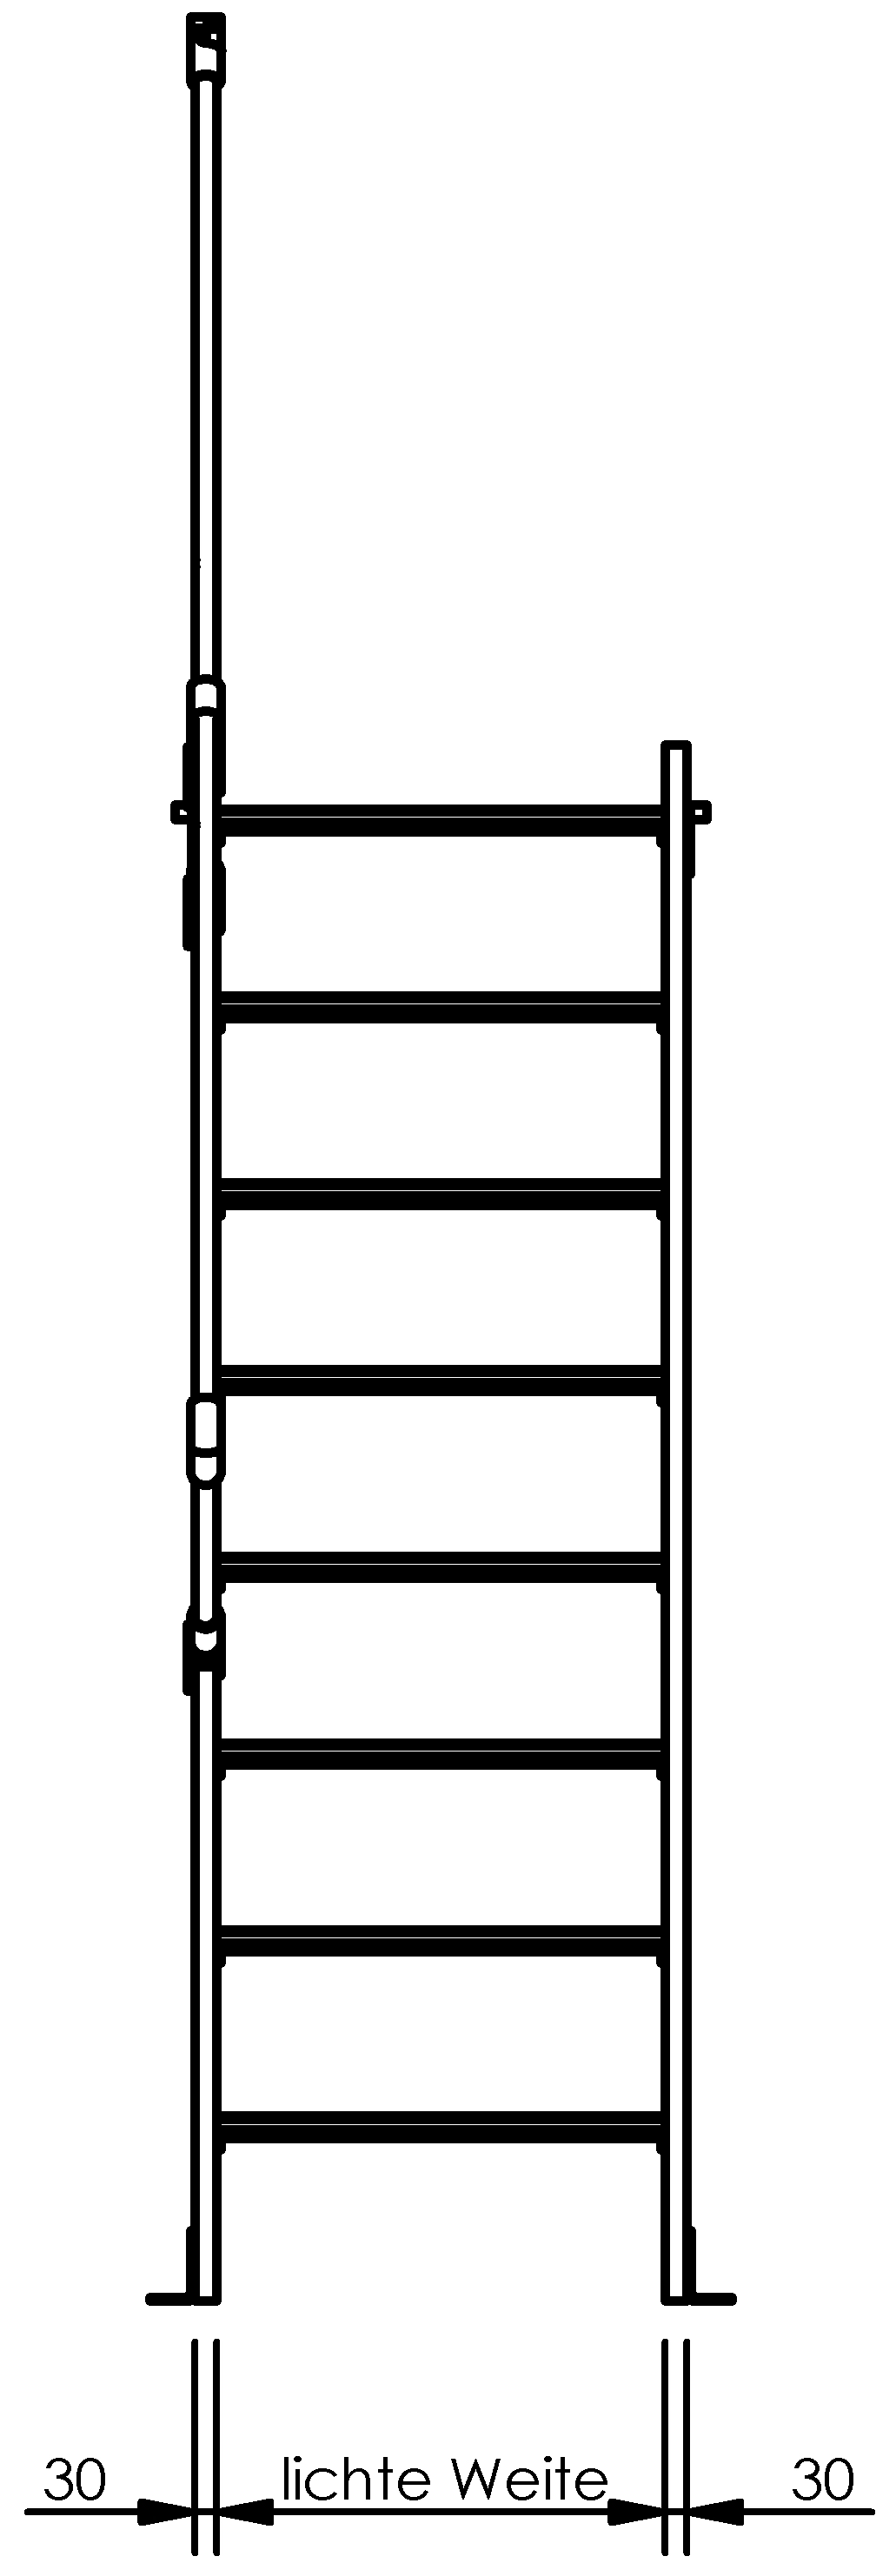 Selbstbautreppen, LW 1000mm, Stufen aus Alu, Neigung 45°